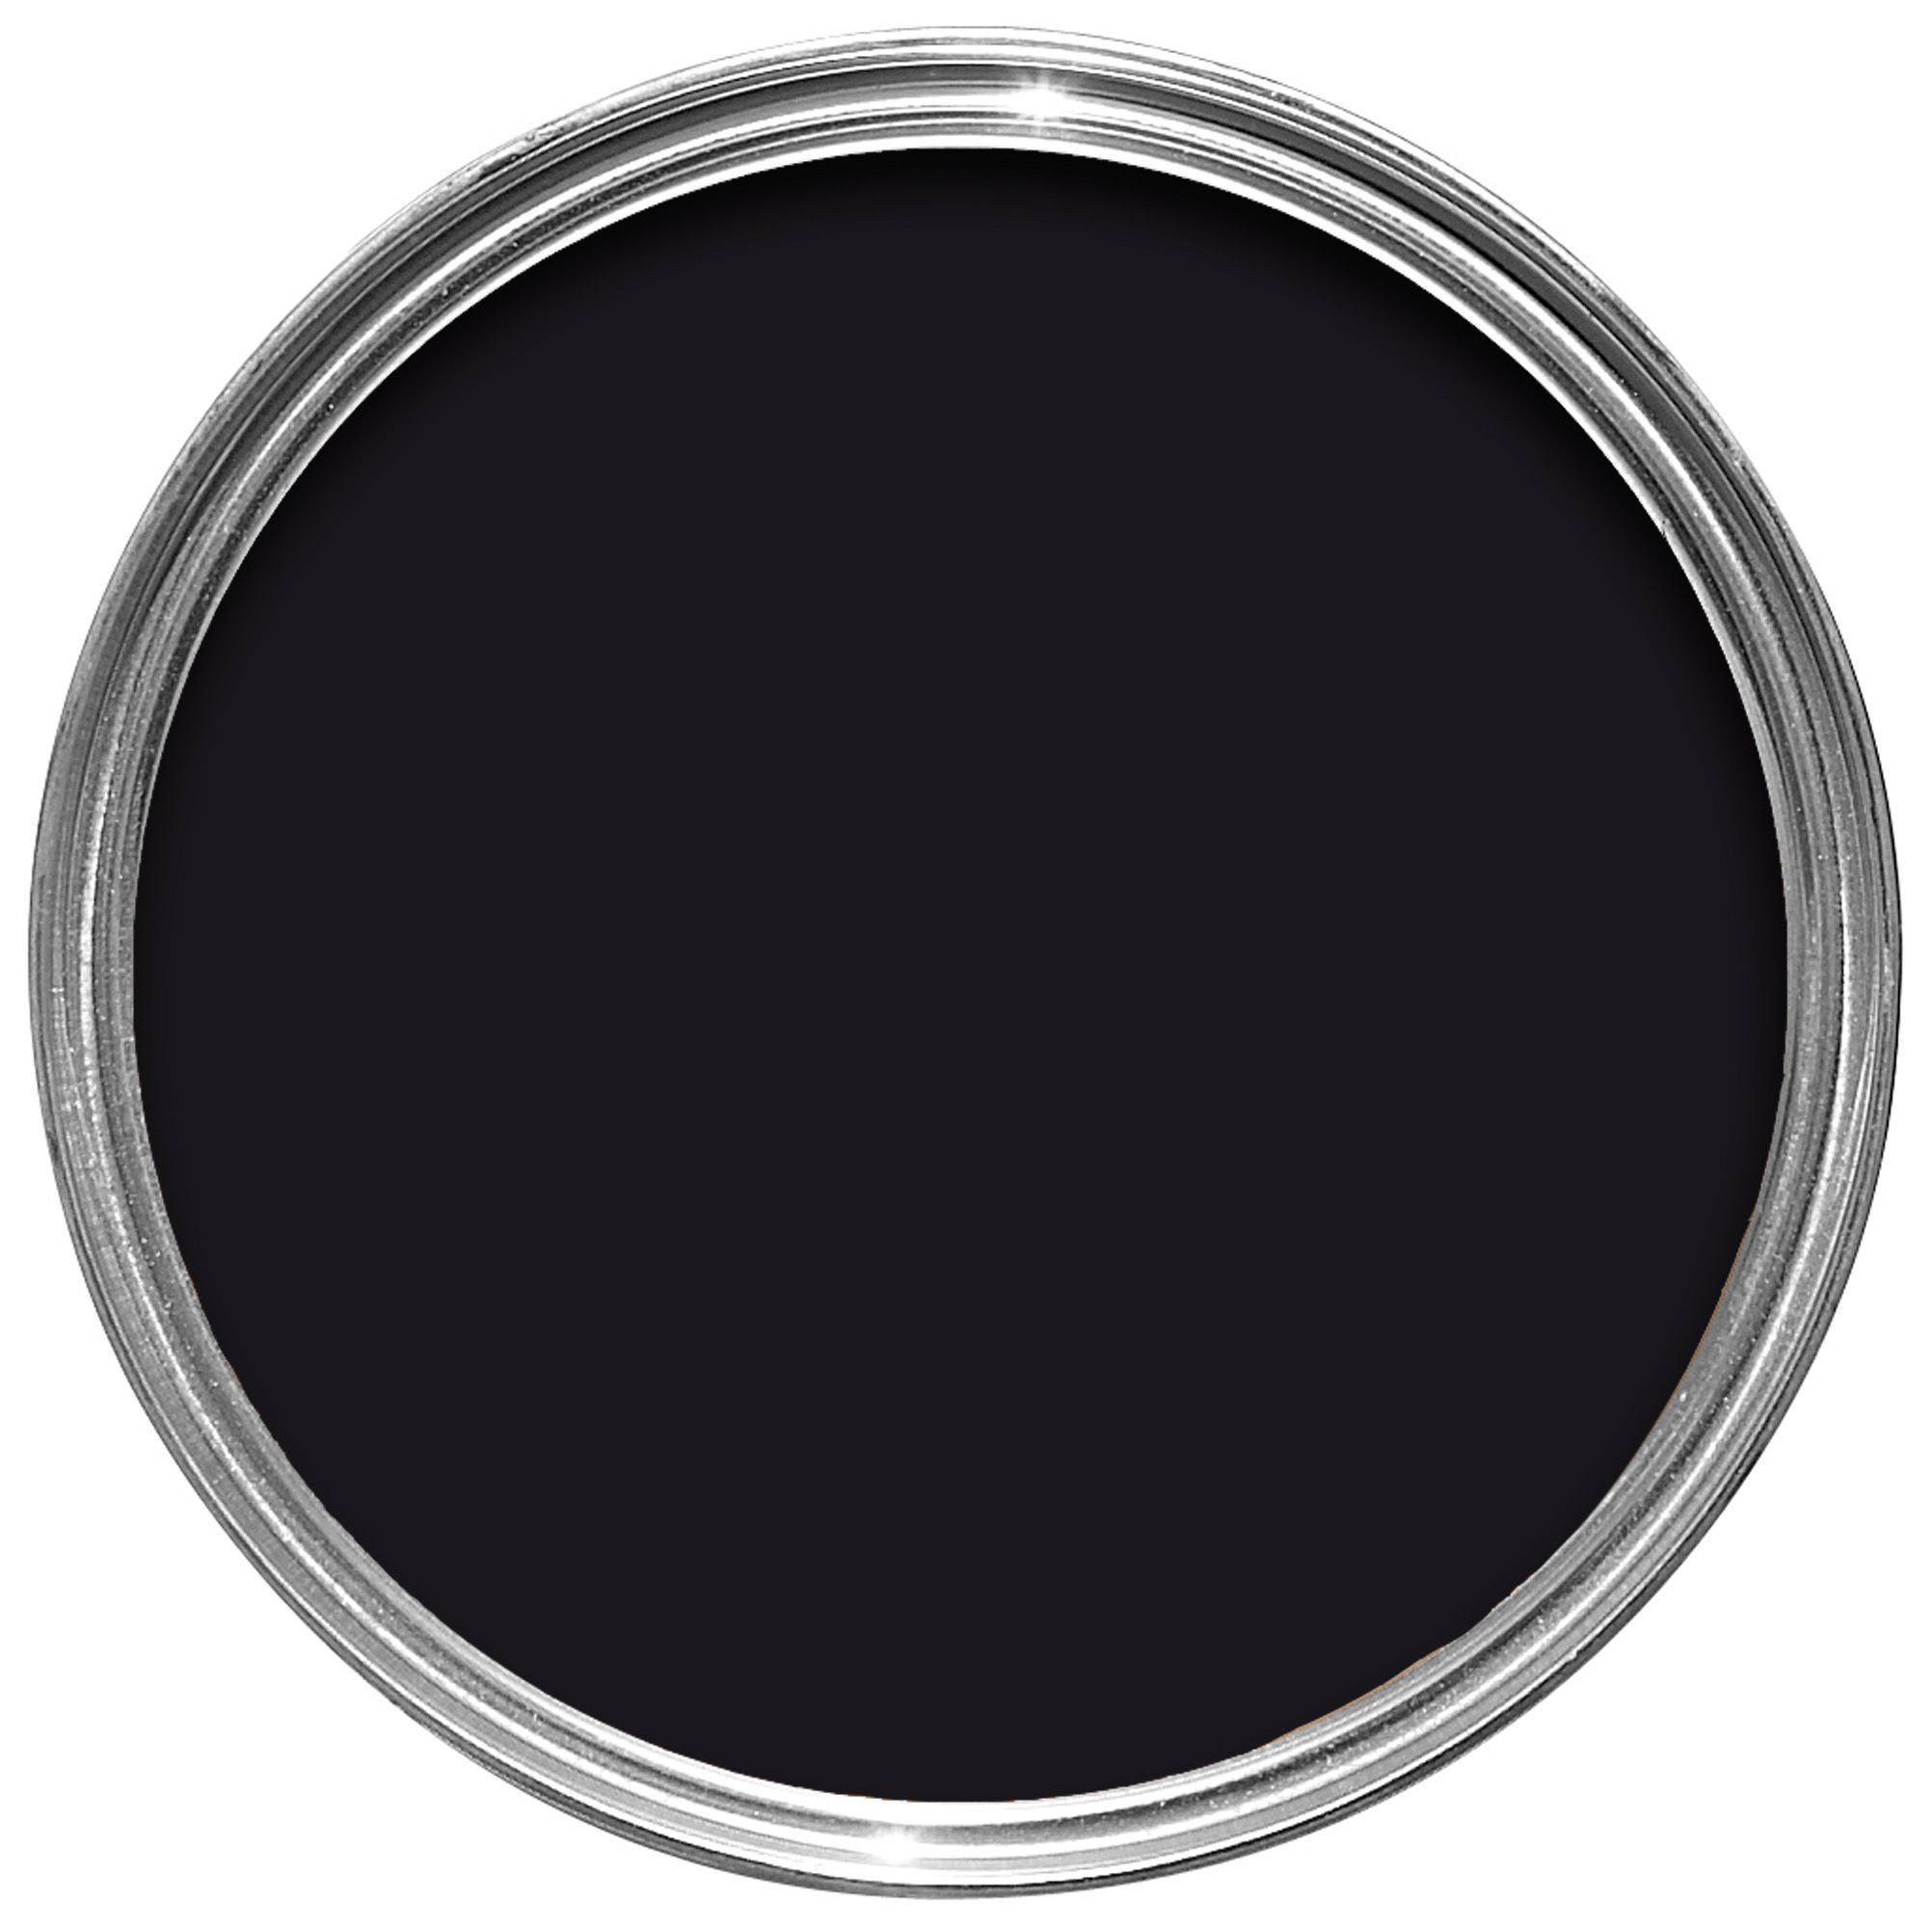 Rust-Oleum Painter's Touch Black Gloss Multi-surface paint, 20ml